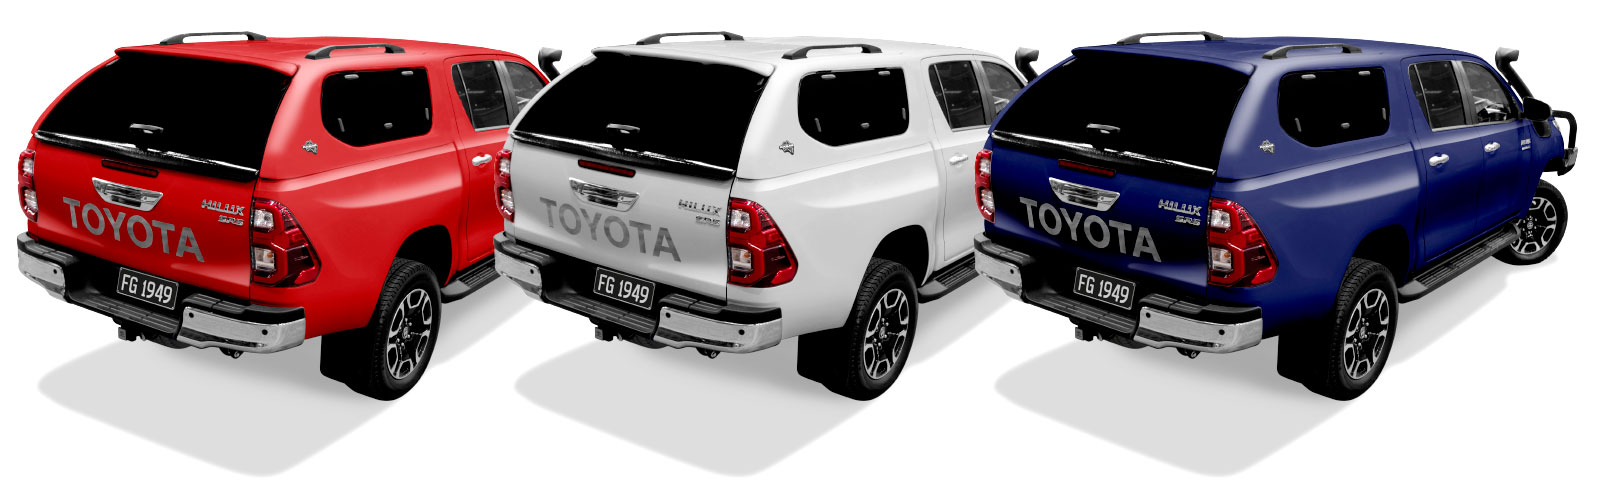 2020 Toyota Hilux Canopy Colour Options